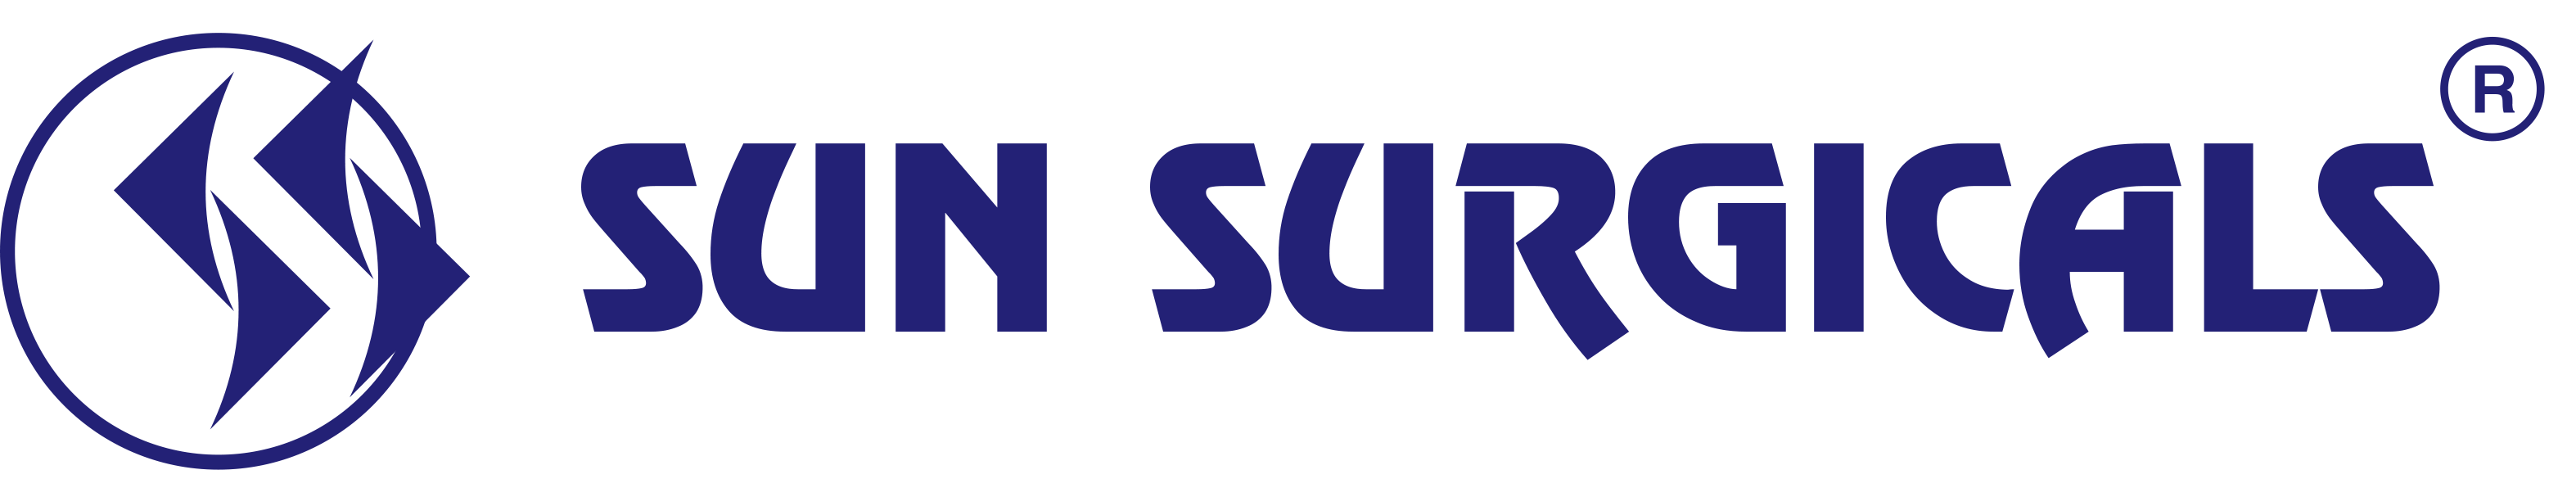 sunsurgicals logo